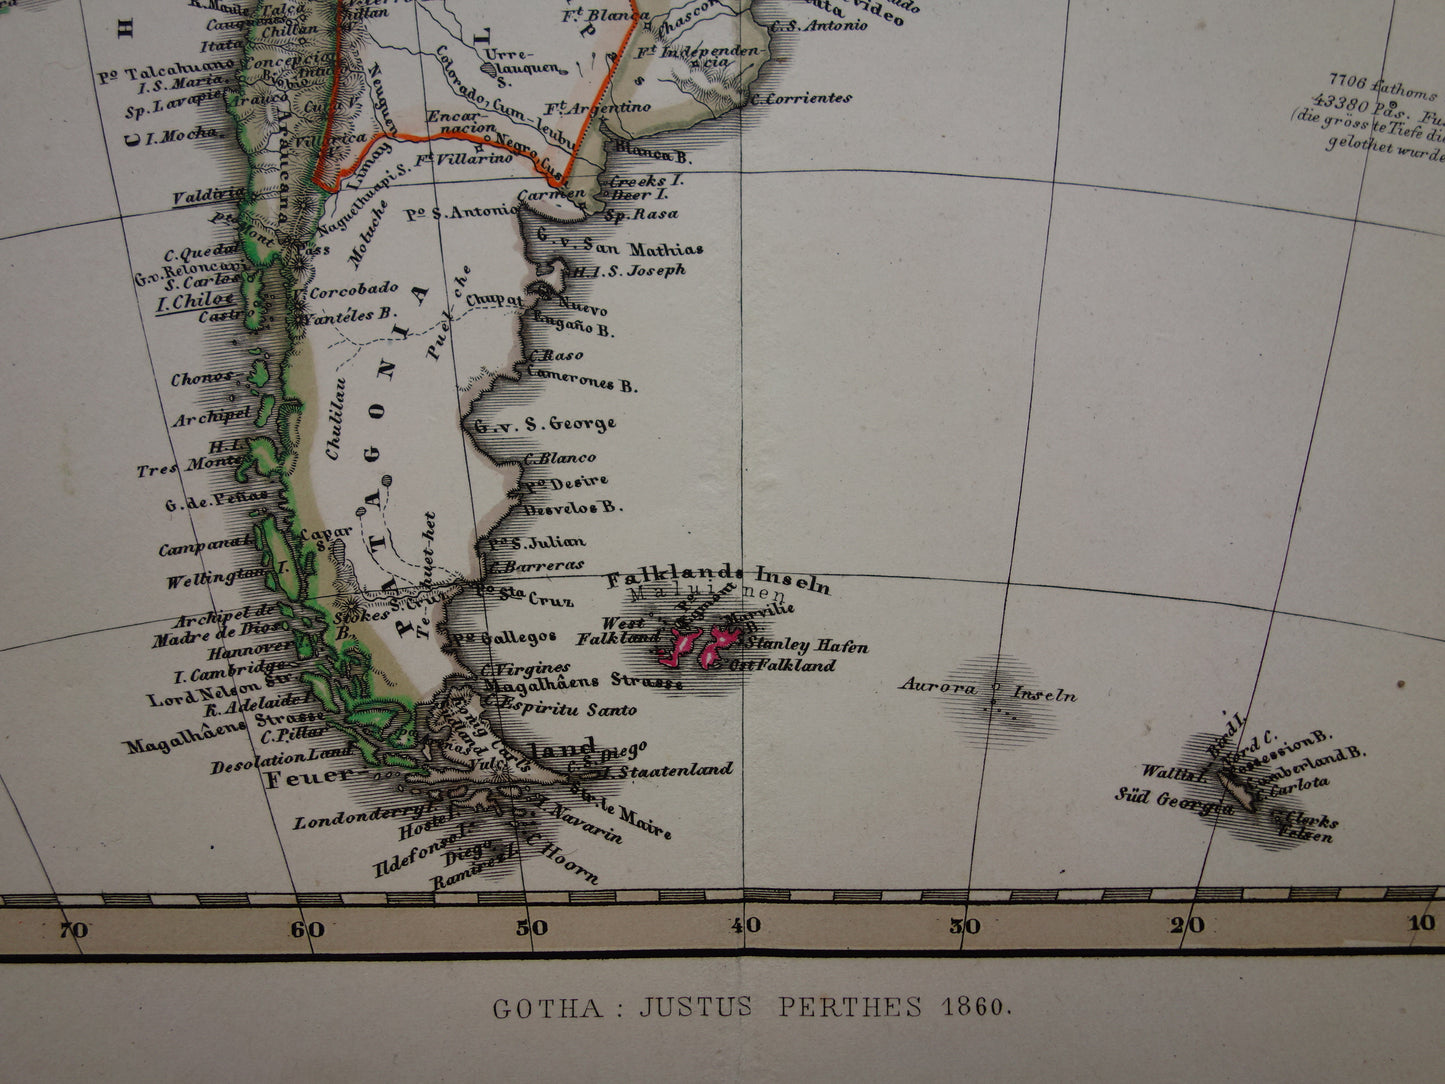 ZUID-AMERIKA Oude kaart van Zuid-Amerikaans continent in 1860 originele antieke Duitse handgekleurde landkaart poster Brazilië Patagonië Chili met jaartal